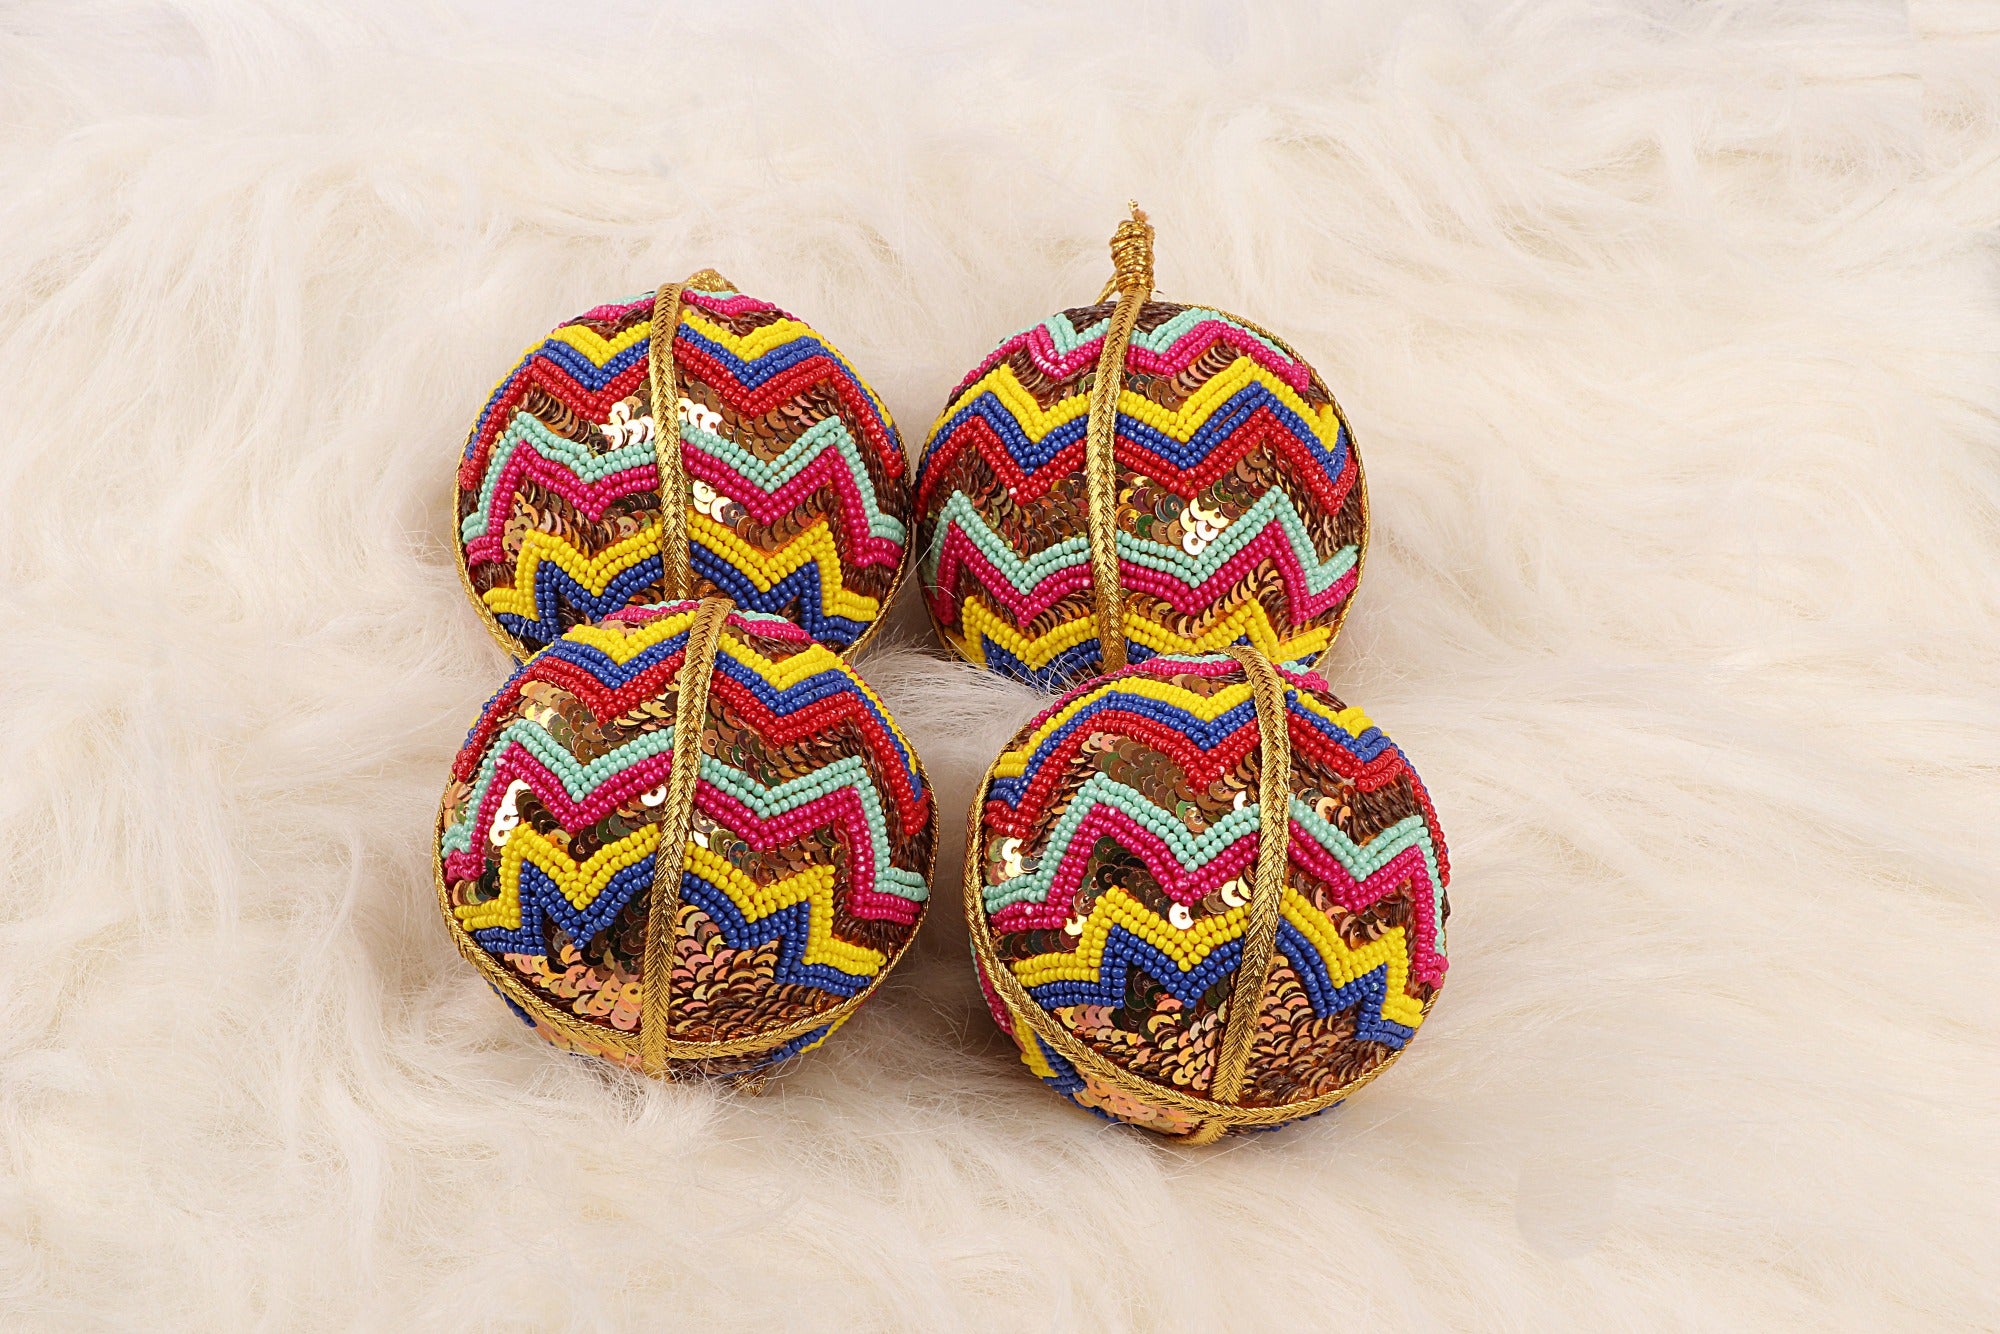 Sparkling Christmas balls ornaments set of 4 pieces - Multicolor christmas balls tree ornaments for holiday decor (1SET=4PCS)